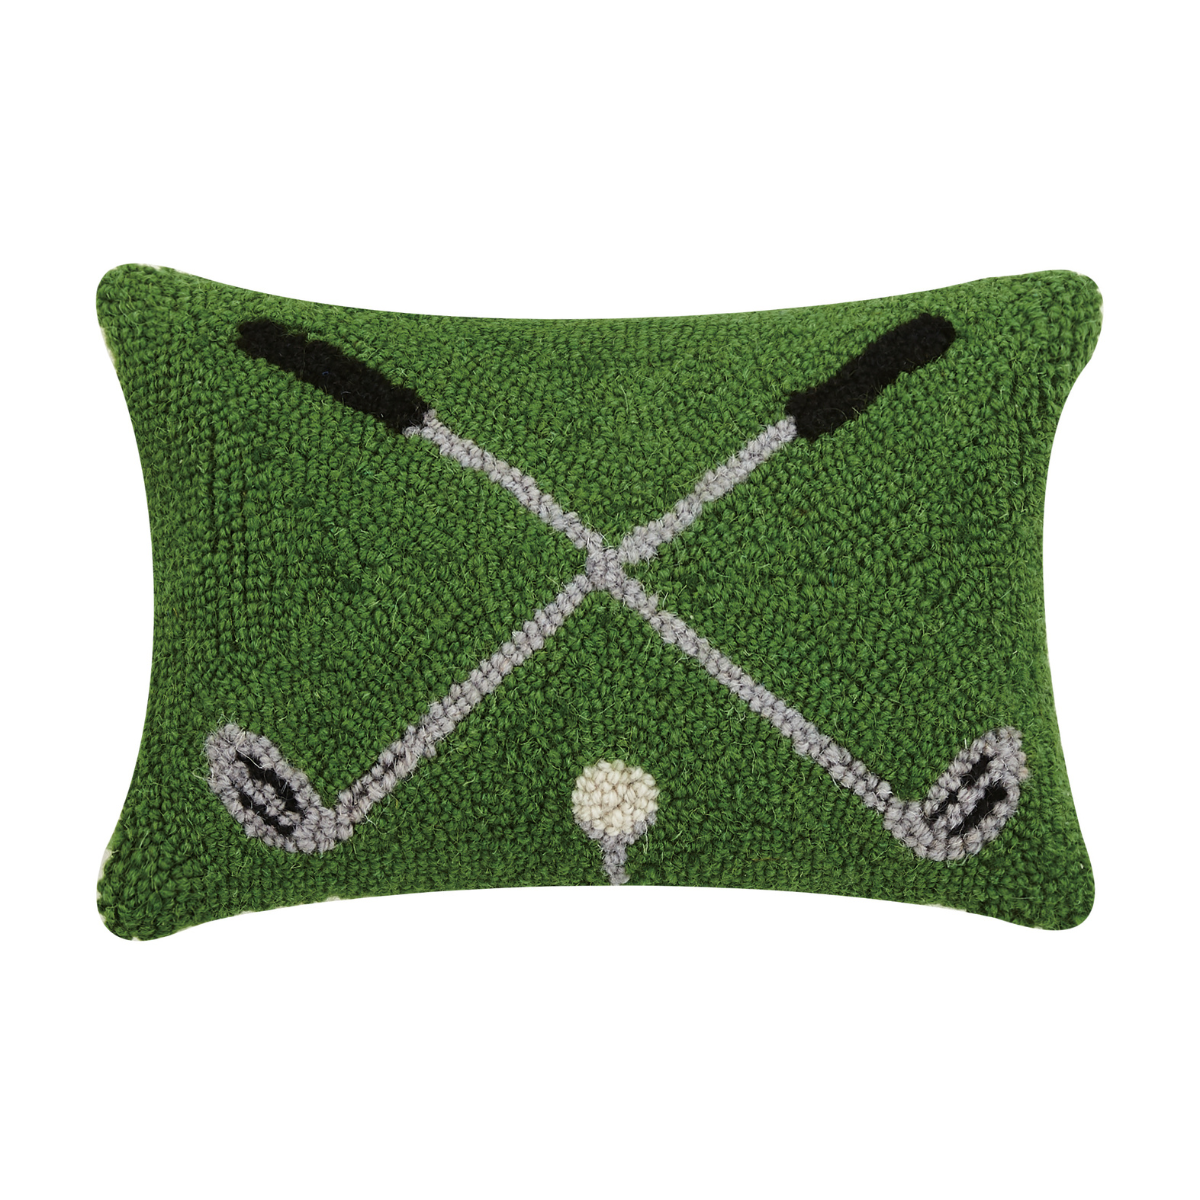 Golf Clubs Hooked Wool Throw Pillow